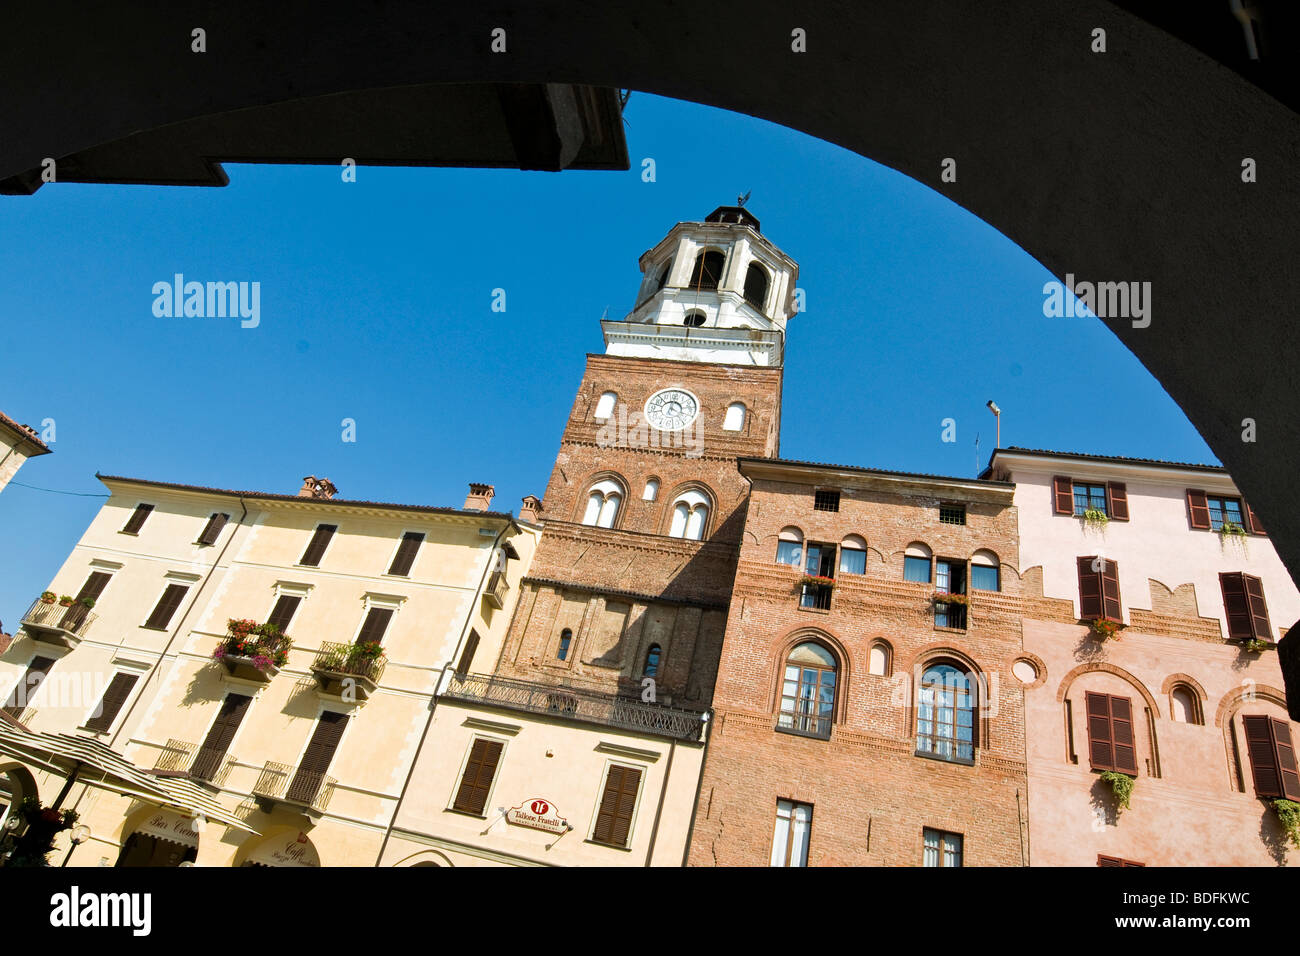 Old Square, Savigliano, Province of Cuneo, Italy Stock Photo